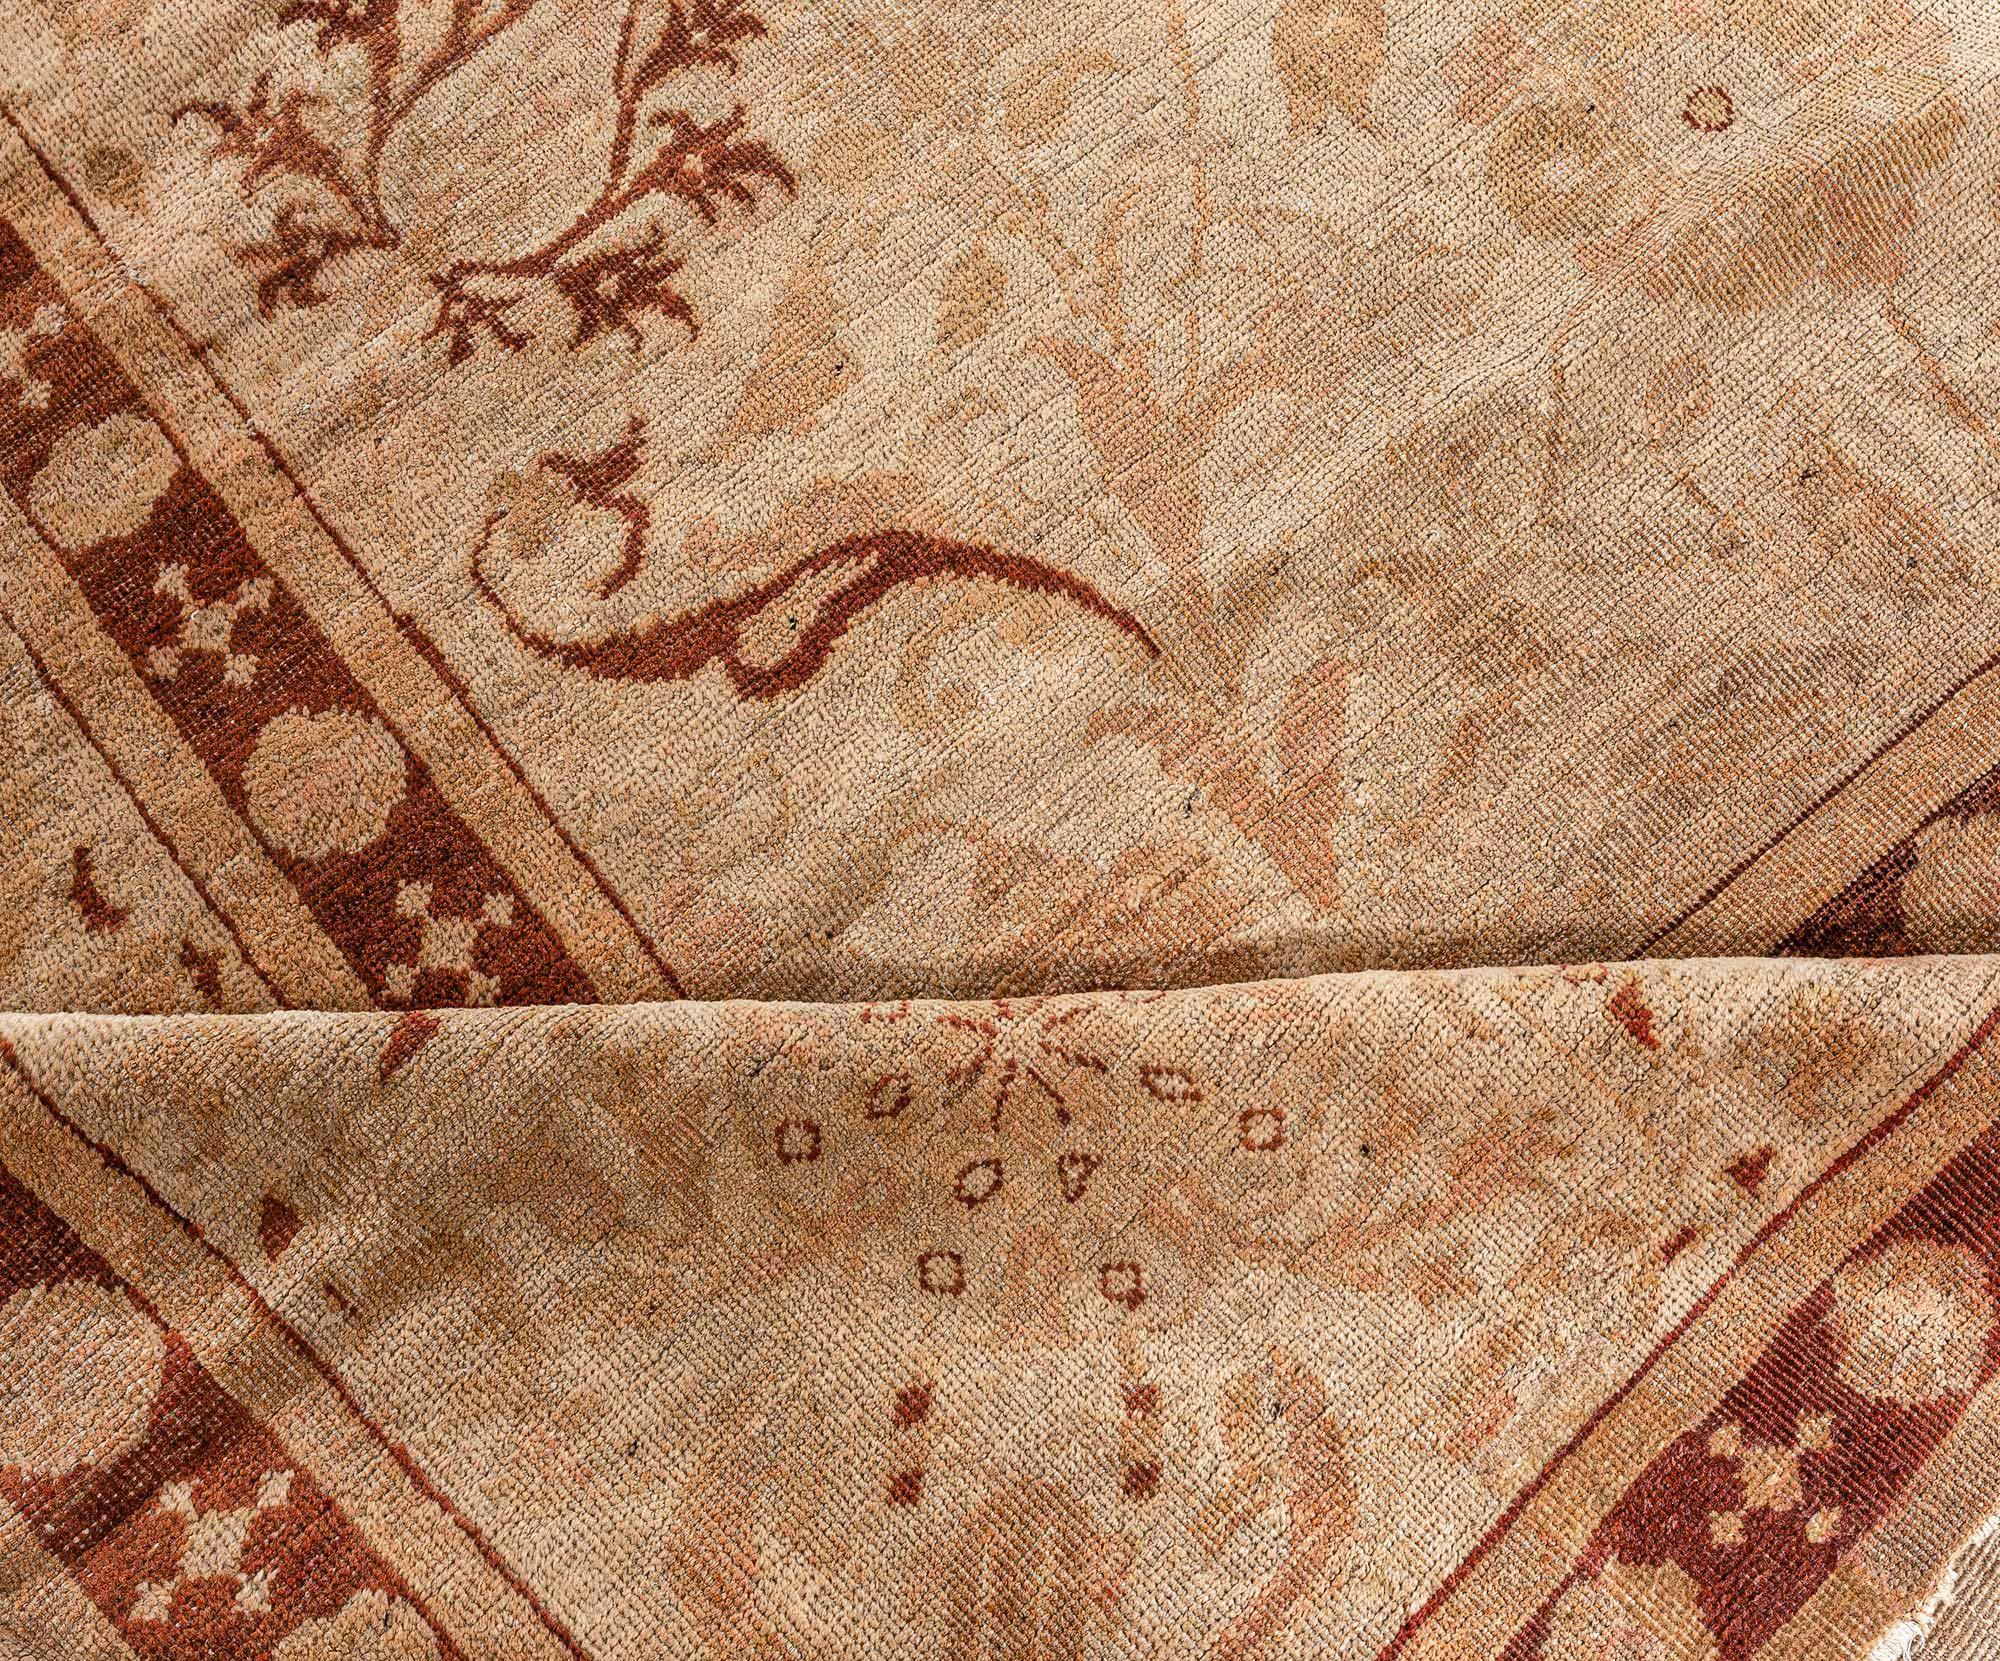 Antique Indian Amritsar Beige handmade wool rug
Size: 13'8